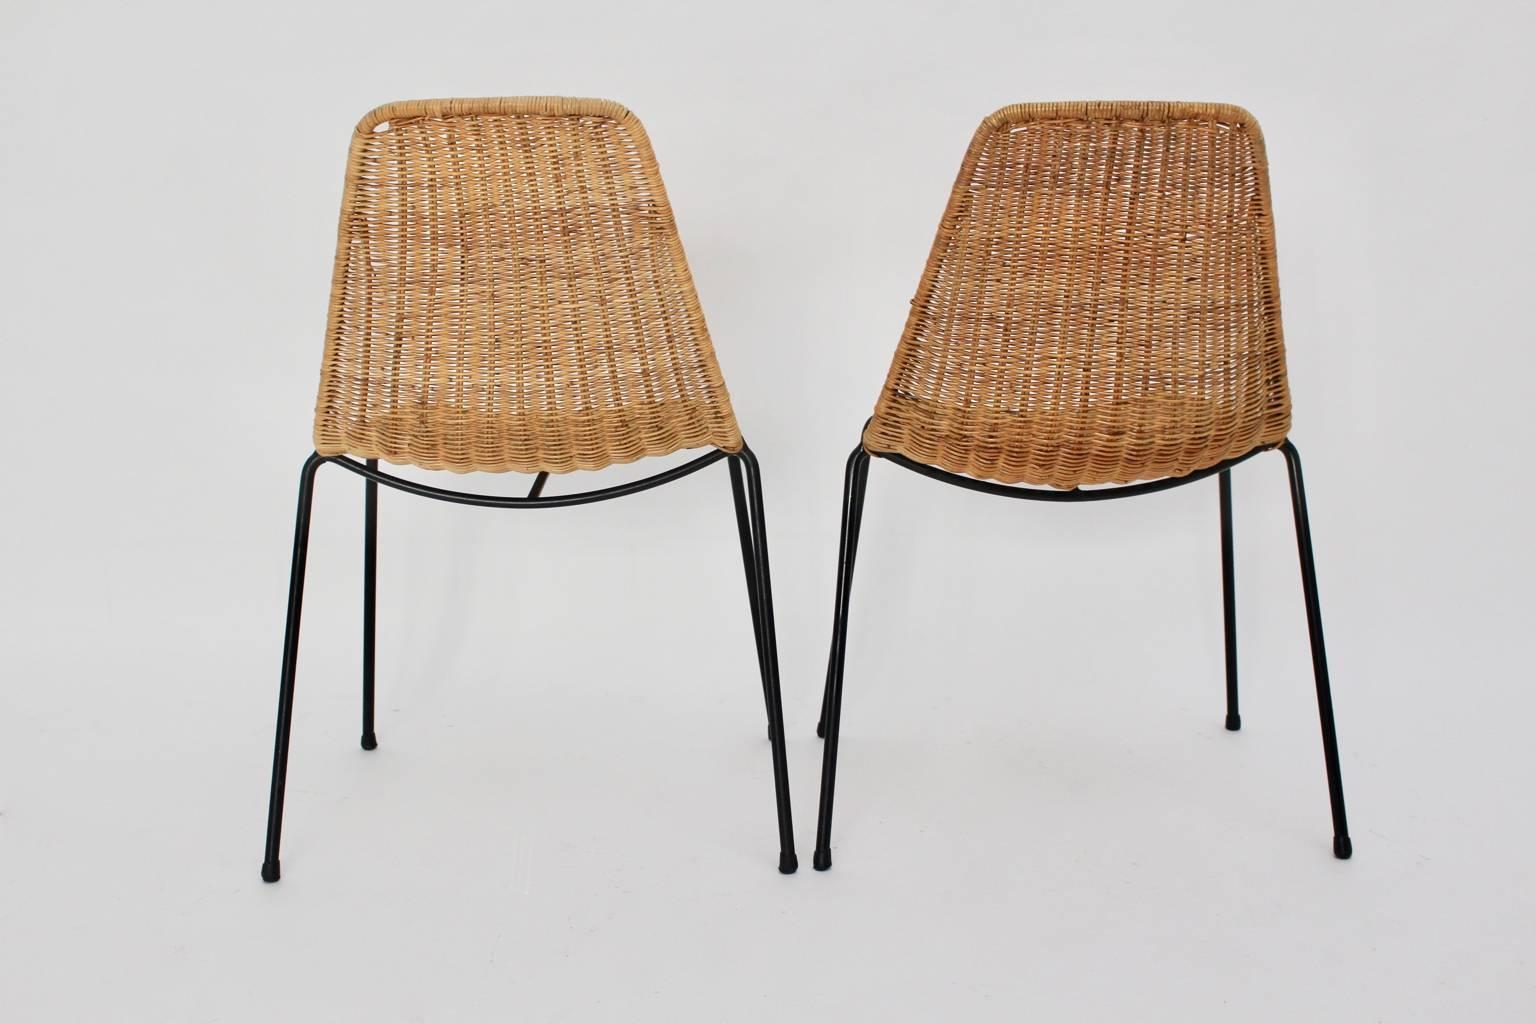 Mid-20th Century Midcentury Modern Rattan Two Chairs Basket Gian Franco Legler, 1951, Switzerland